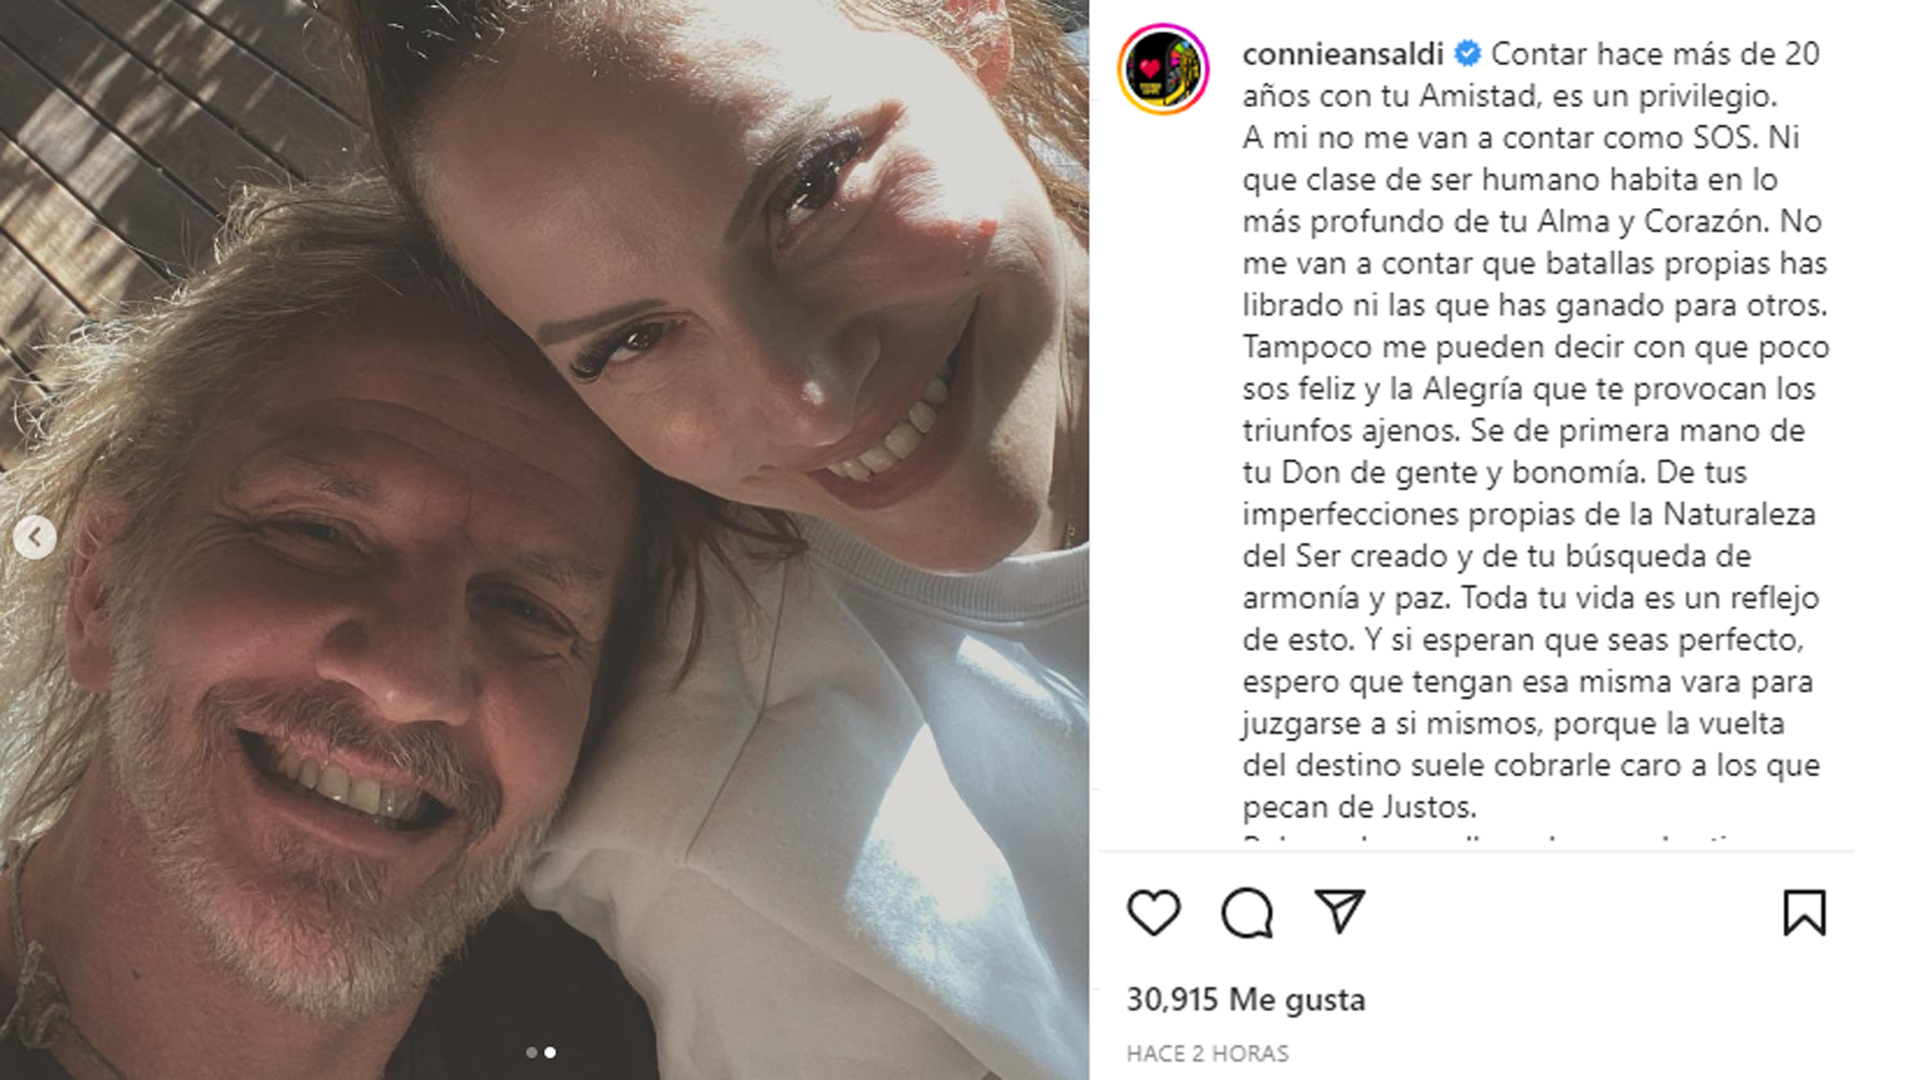 Postingan Connie Ansaldi tentang persahabatannya dengan Facundo Arana